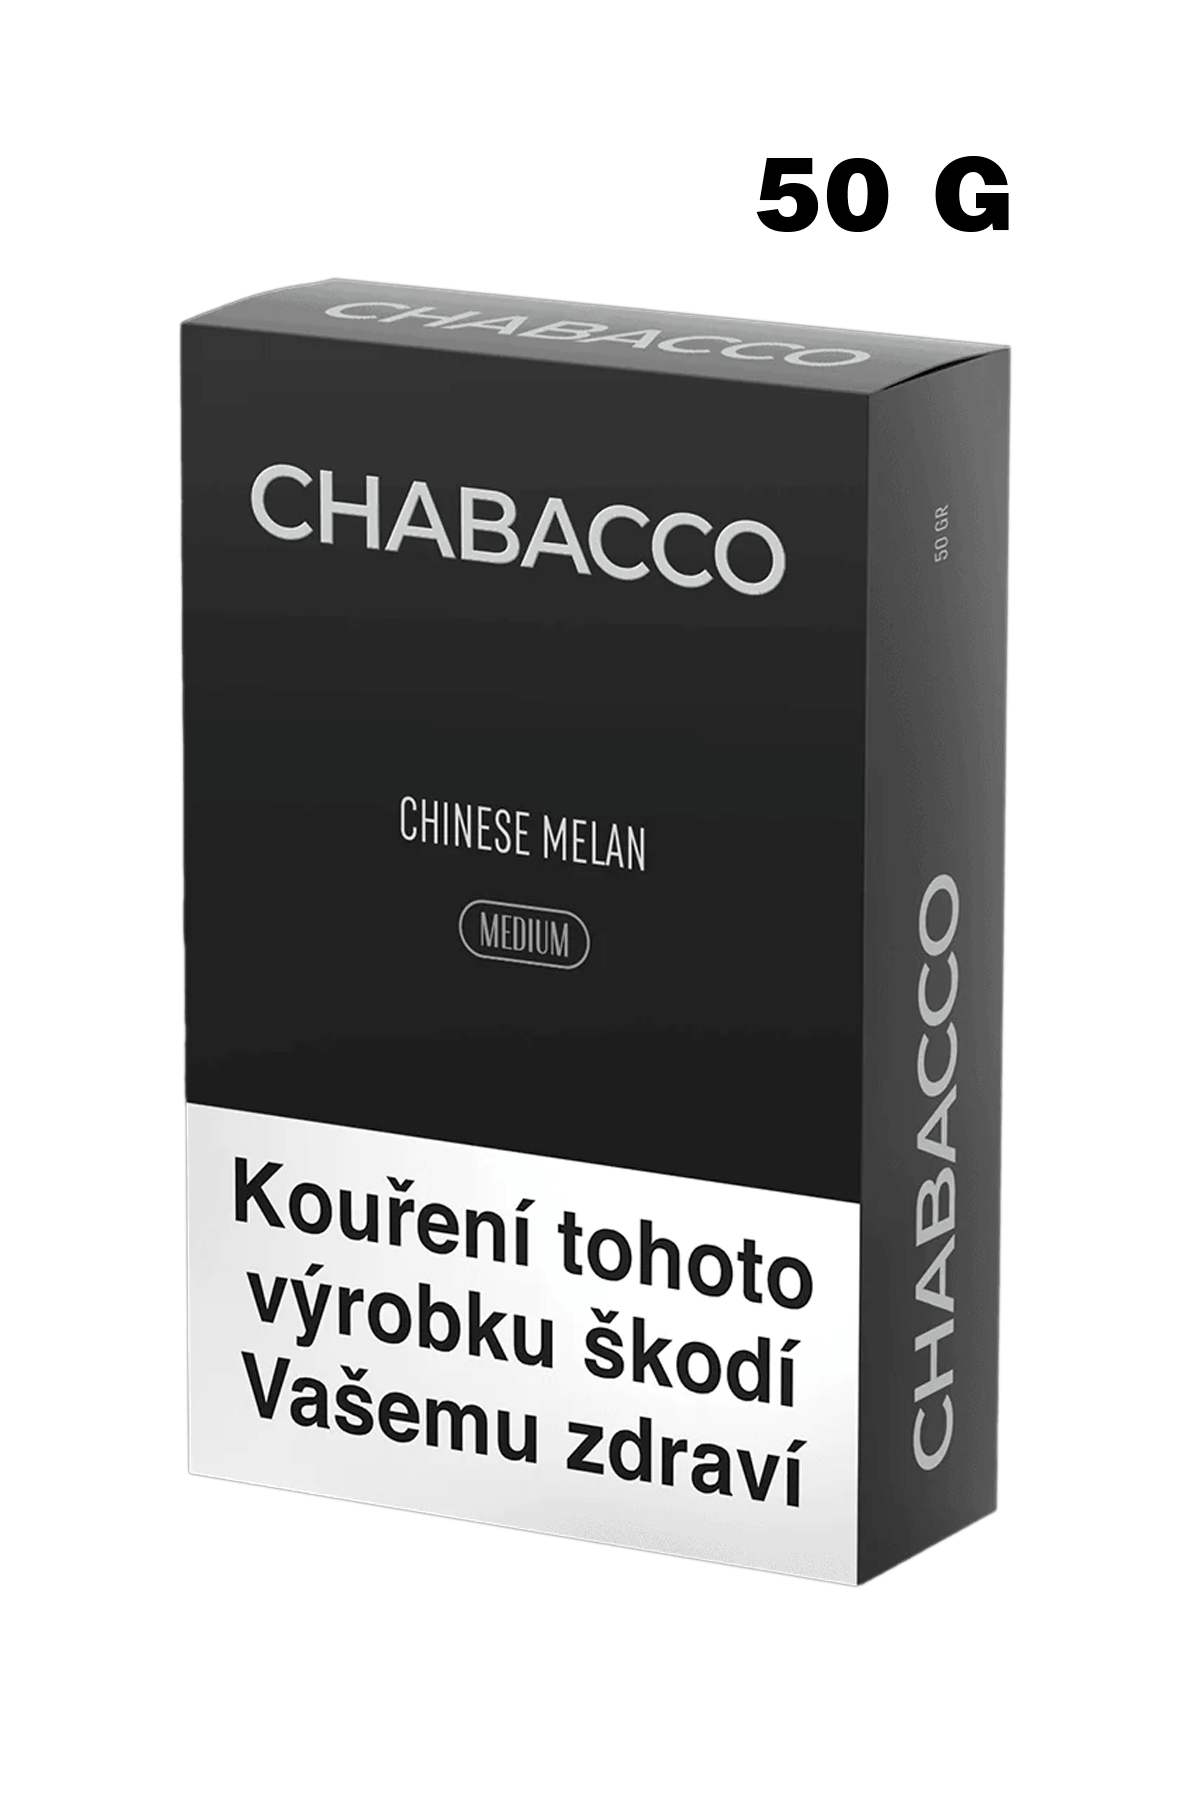 Tabák - Chabacco Medium 50g - Chinese Melan